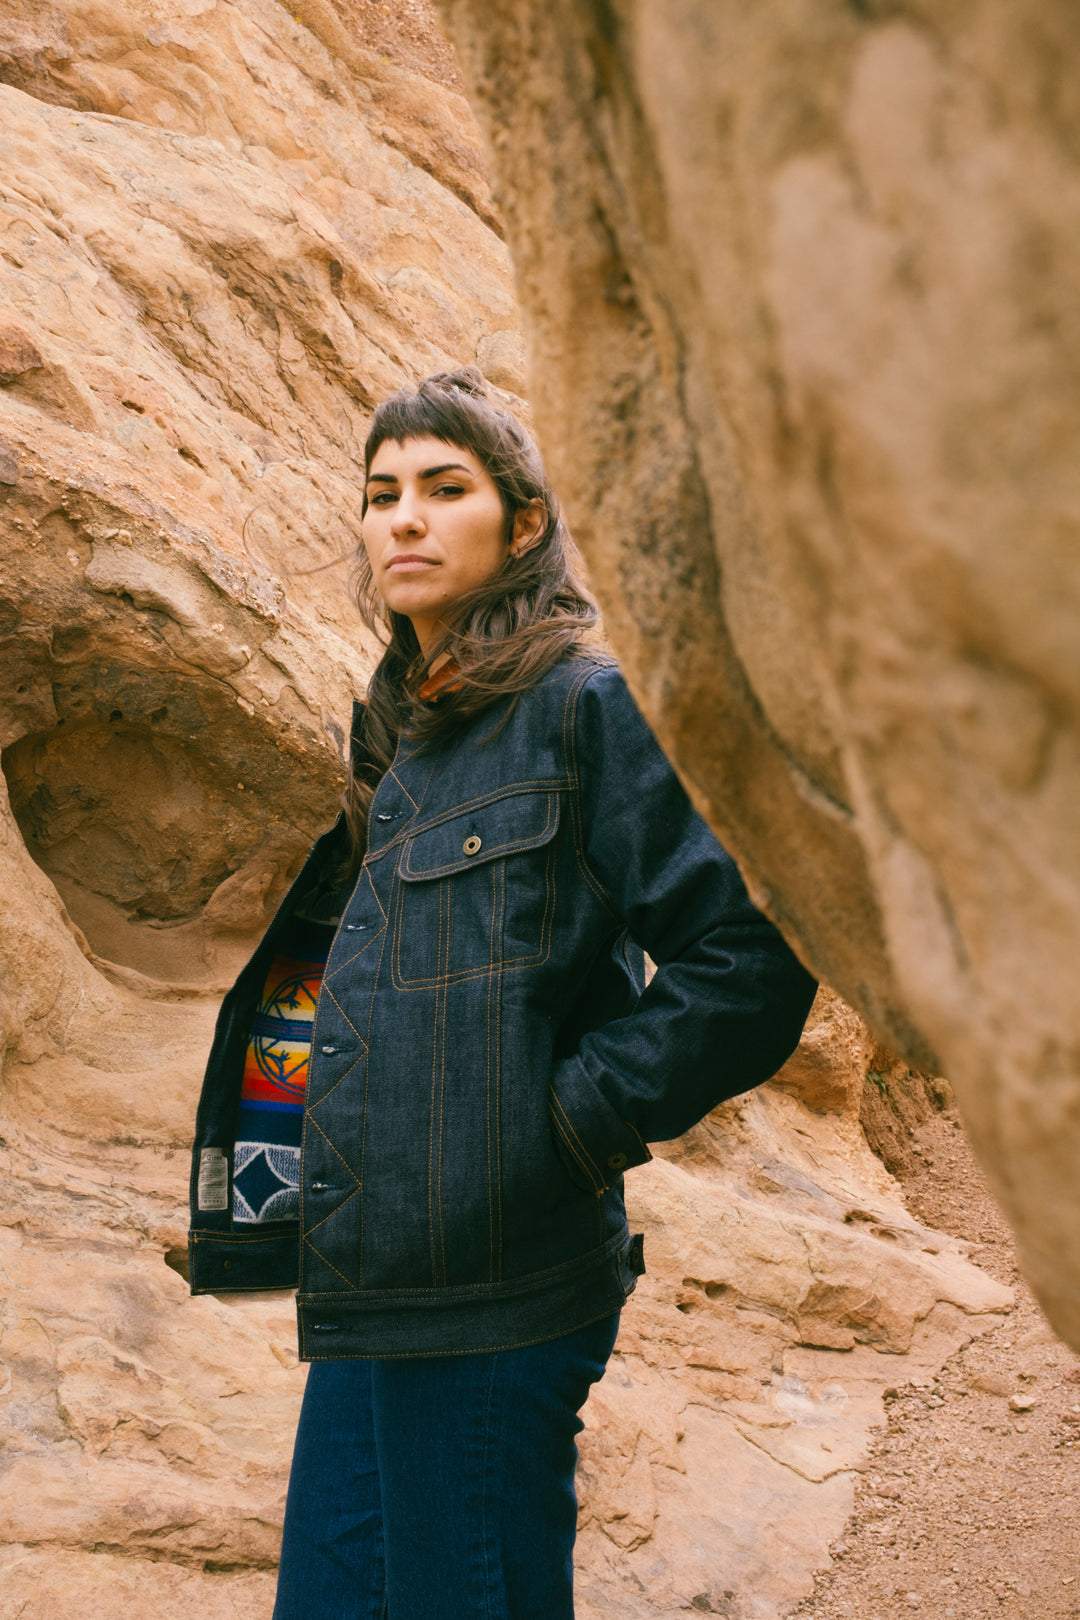 woman wearing denim jacket stands near rock formations